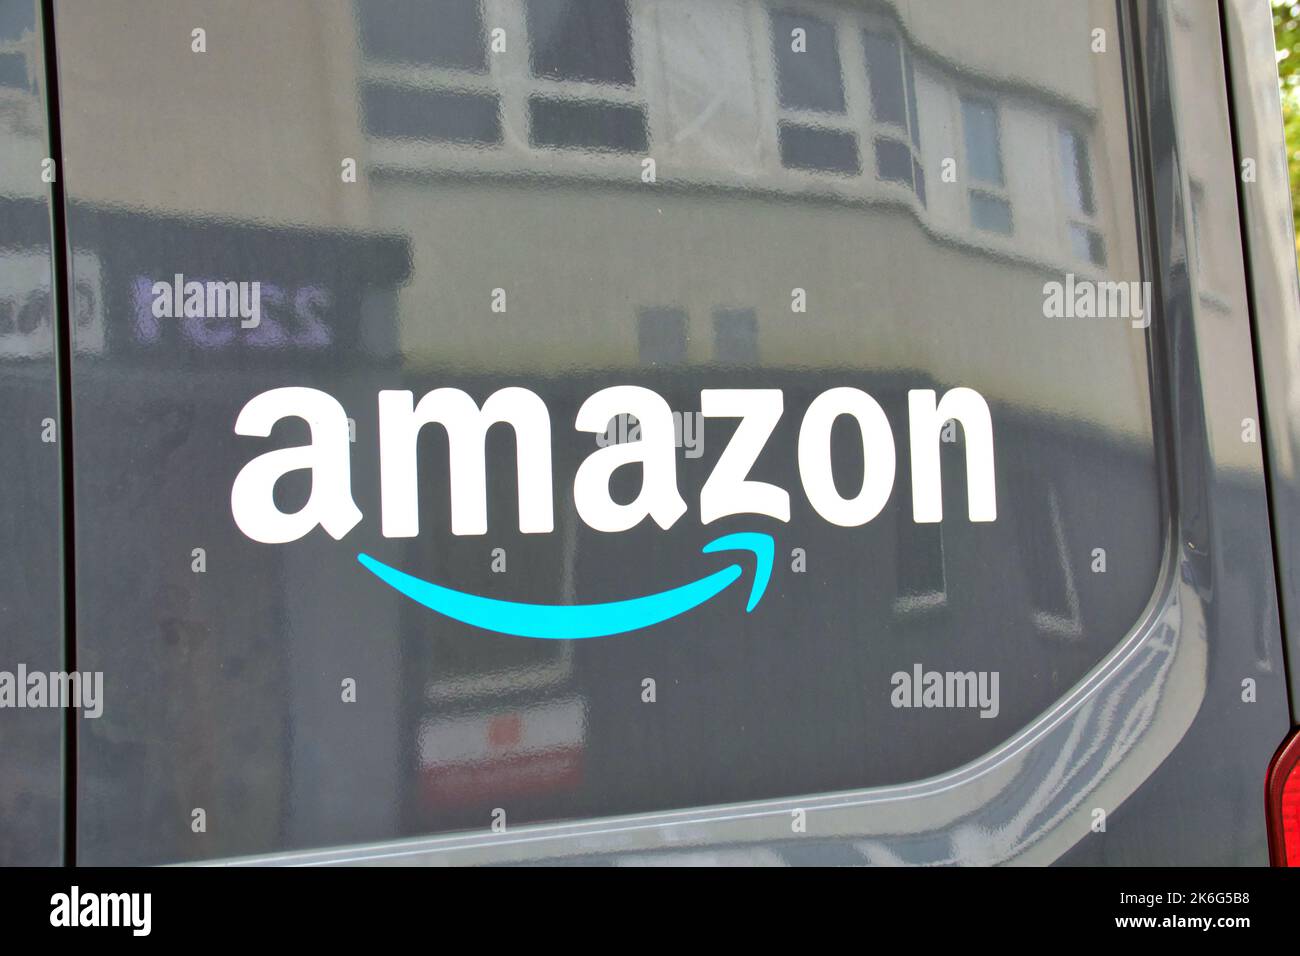 amazon logo on side of delivery van Stock Photo